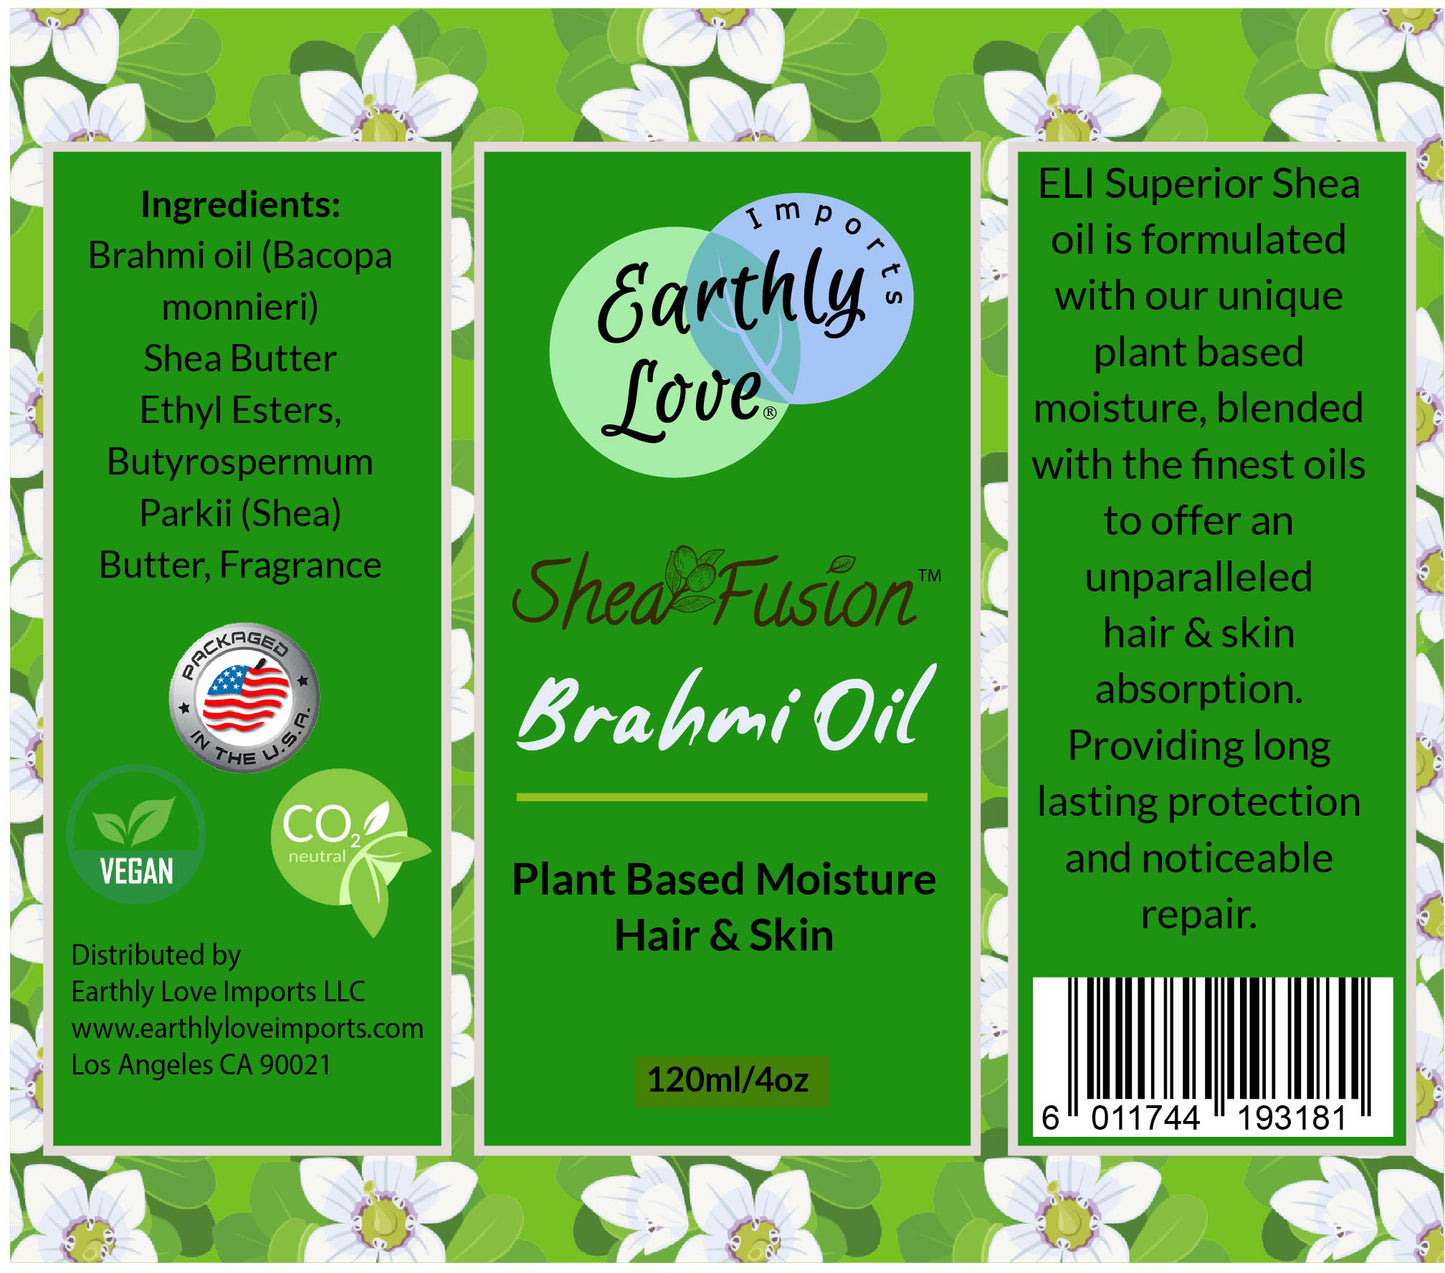 SheaFusion Brahmi oil